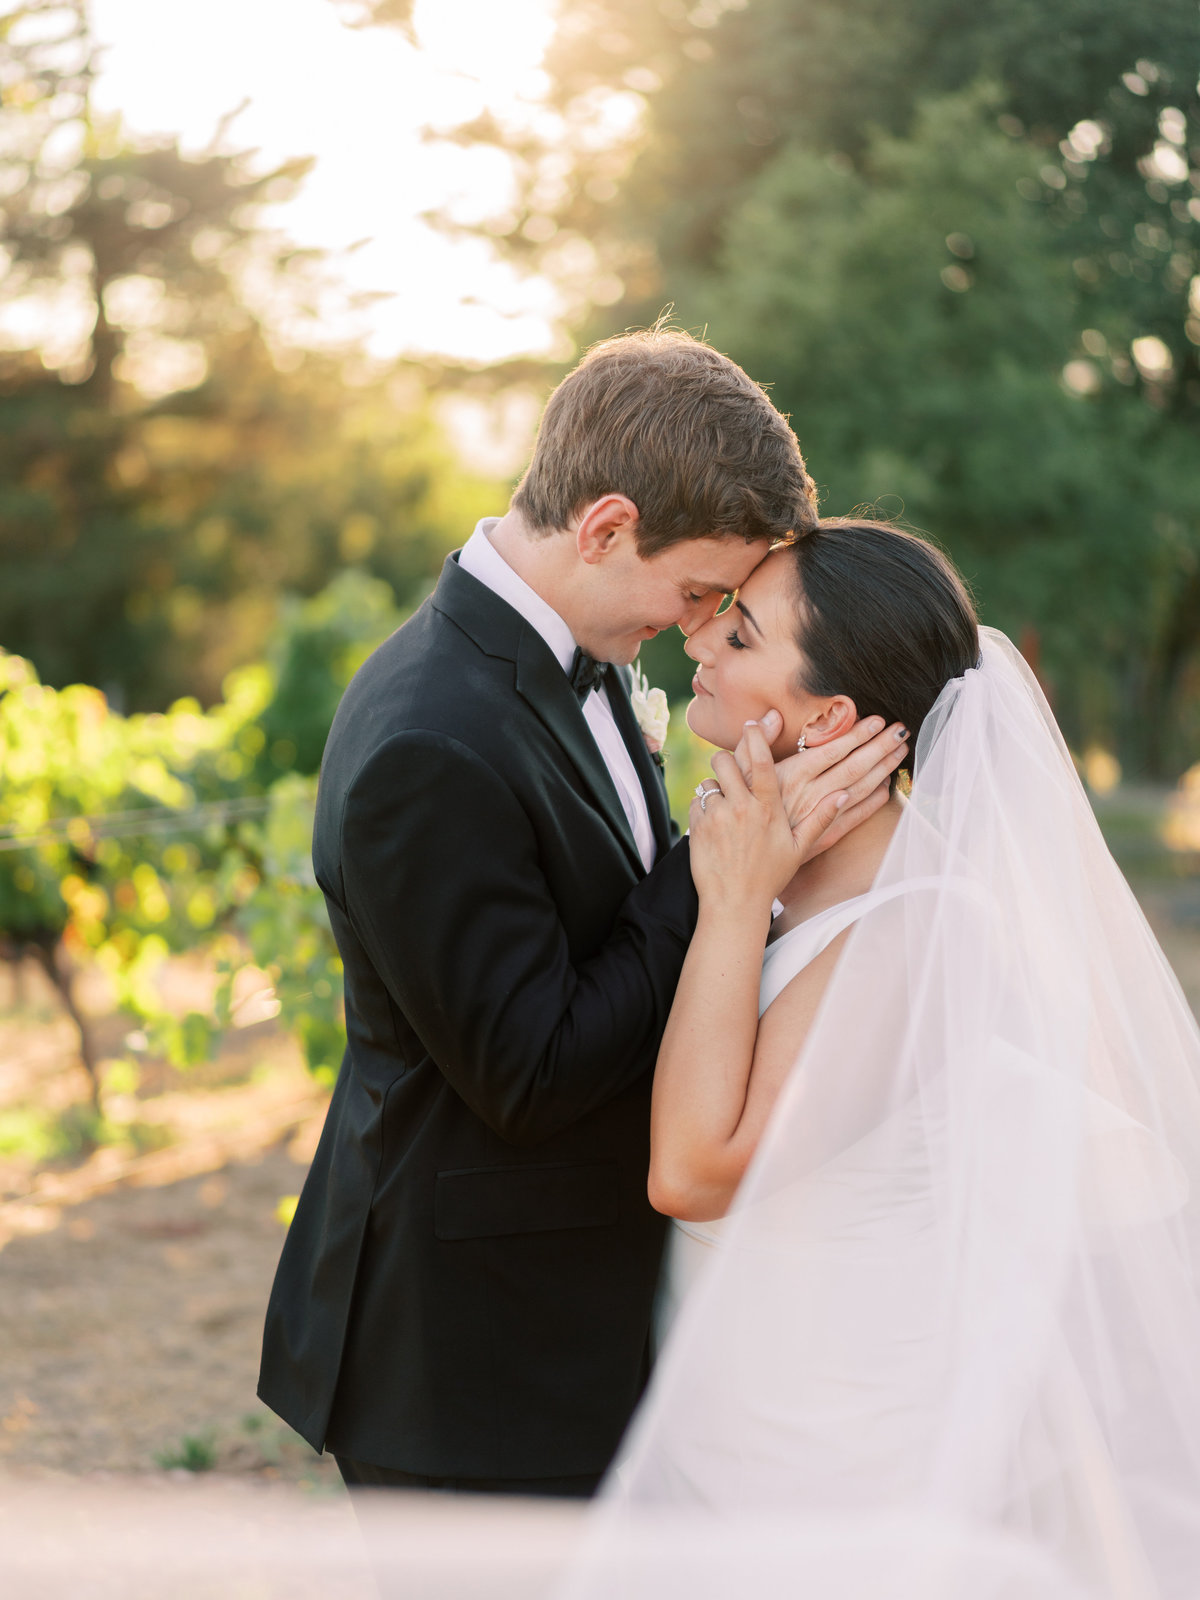 Kelsey + Alex Sonoma Buena Vista Winery Wedding - Cassie Valente Photography 0201